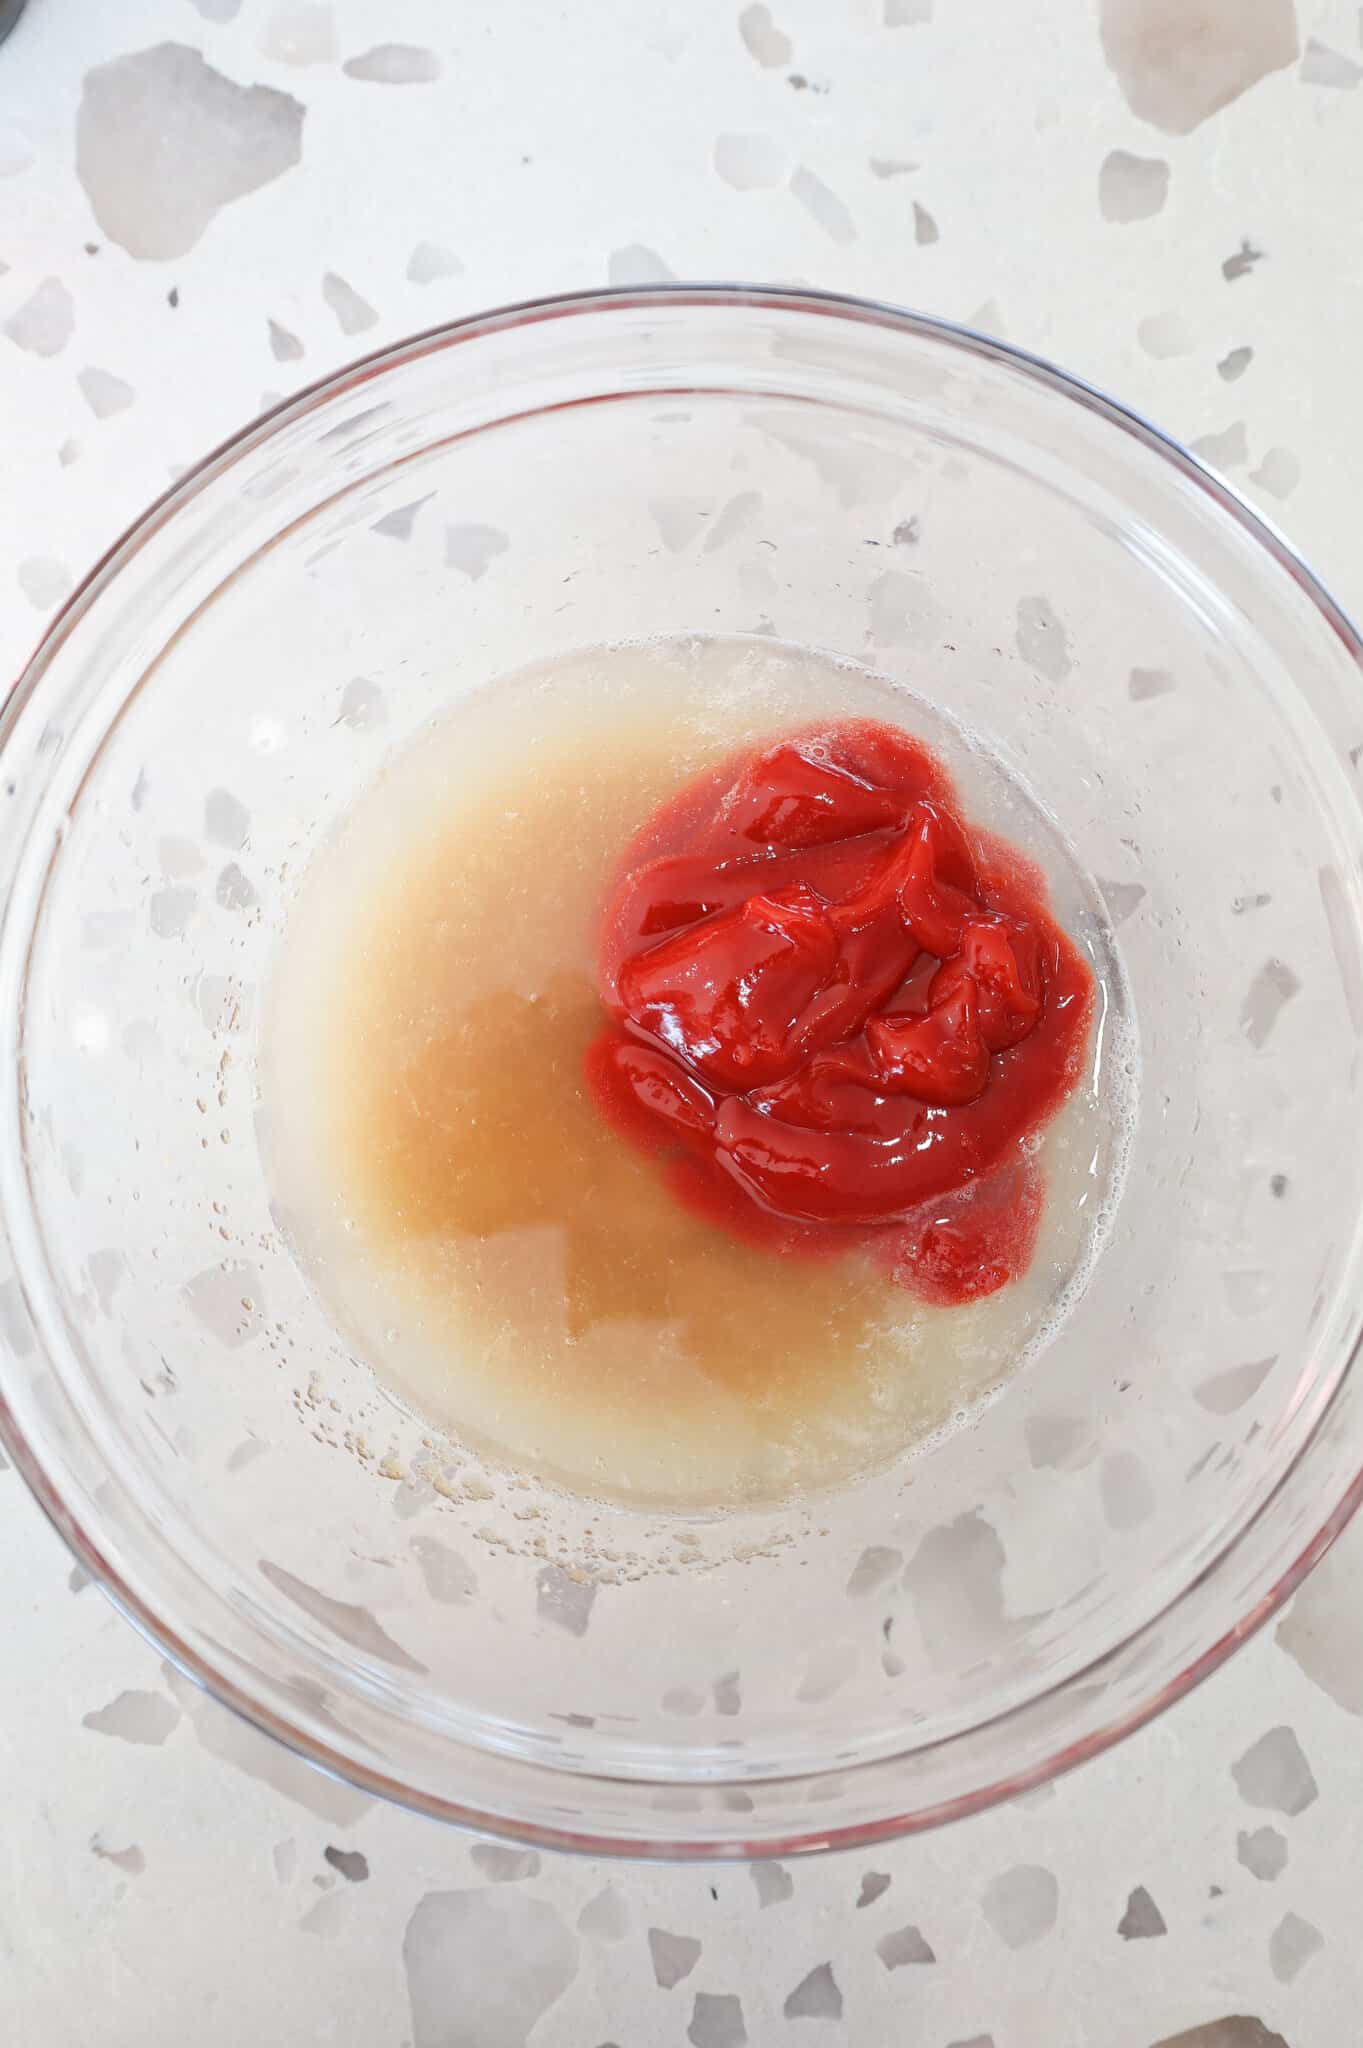 brown sugar, lemonade concentrate and ketchup in a mixing bowl